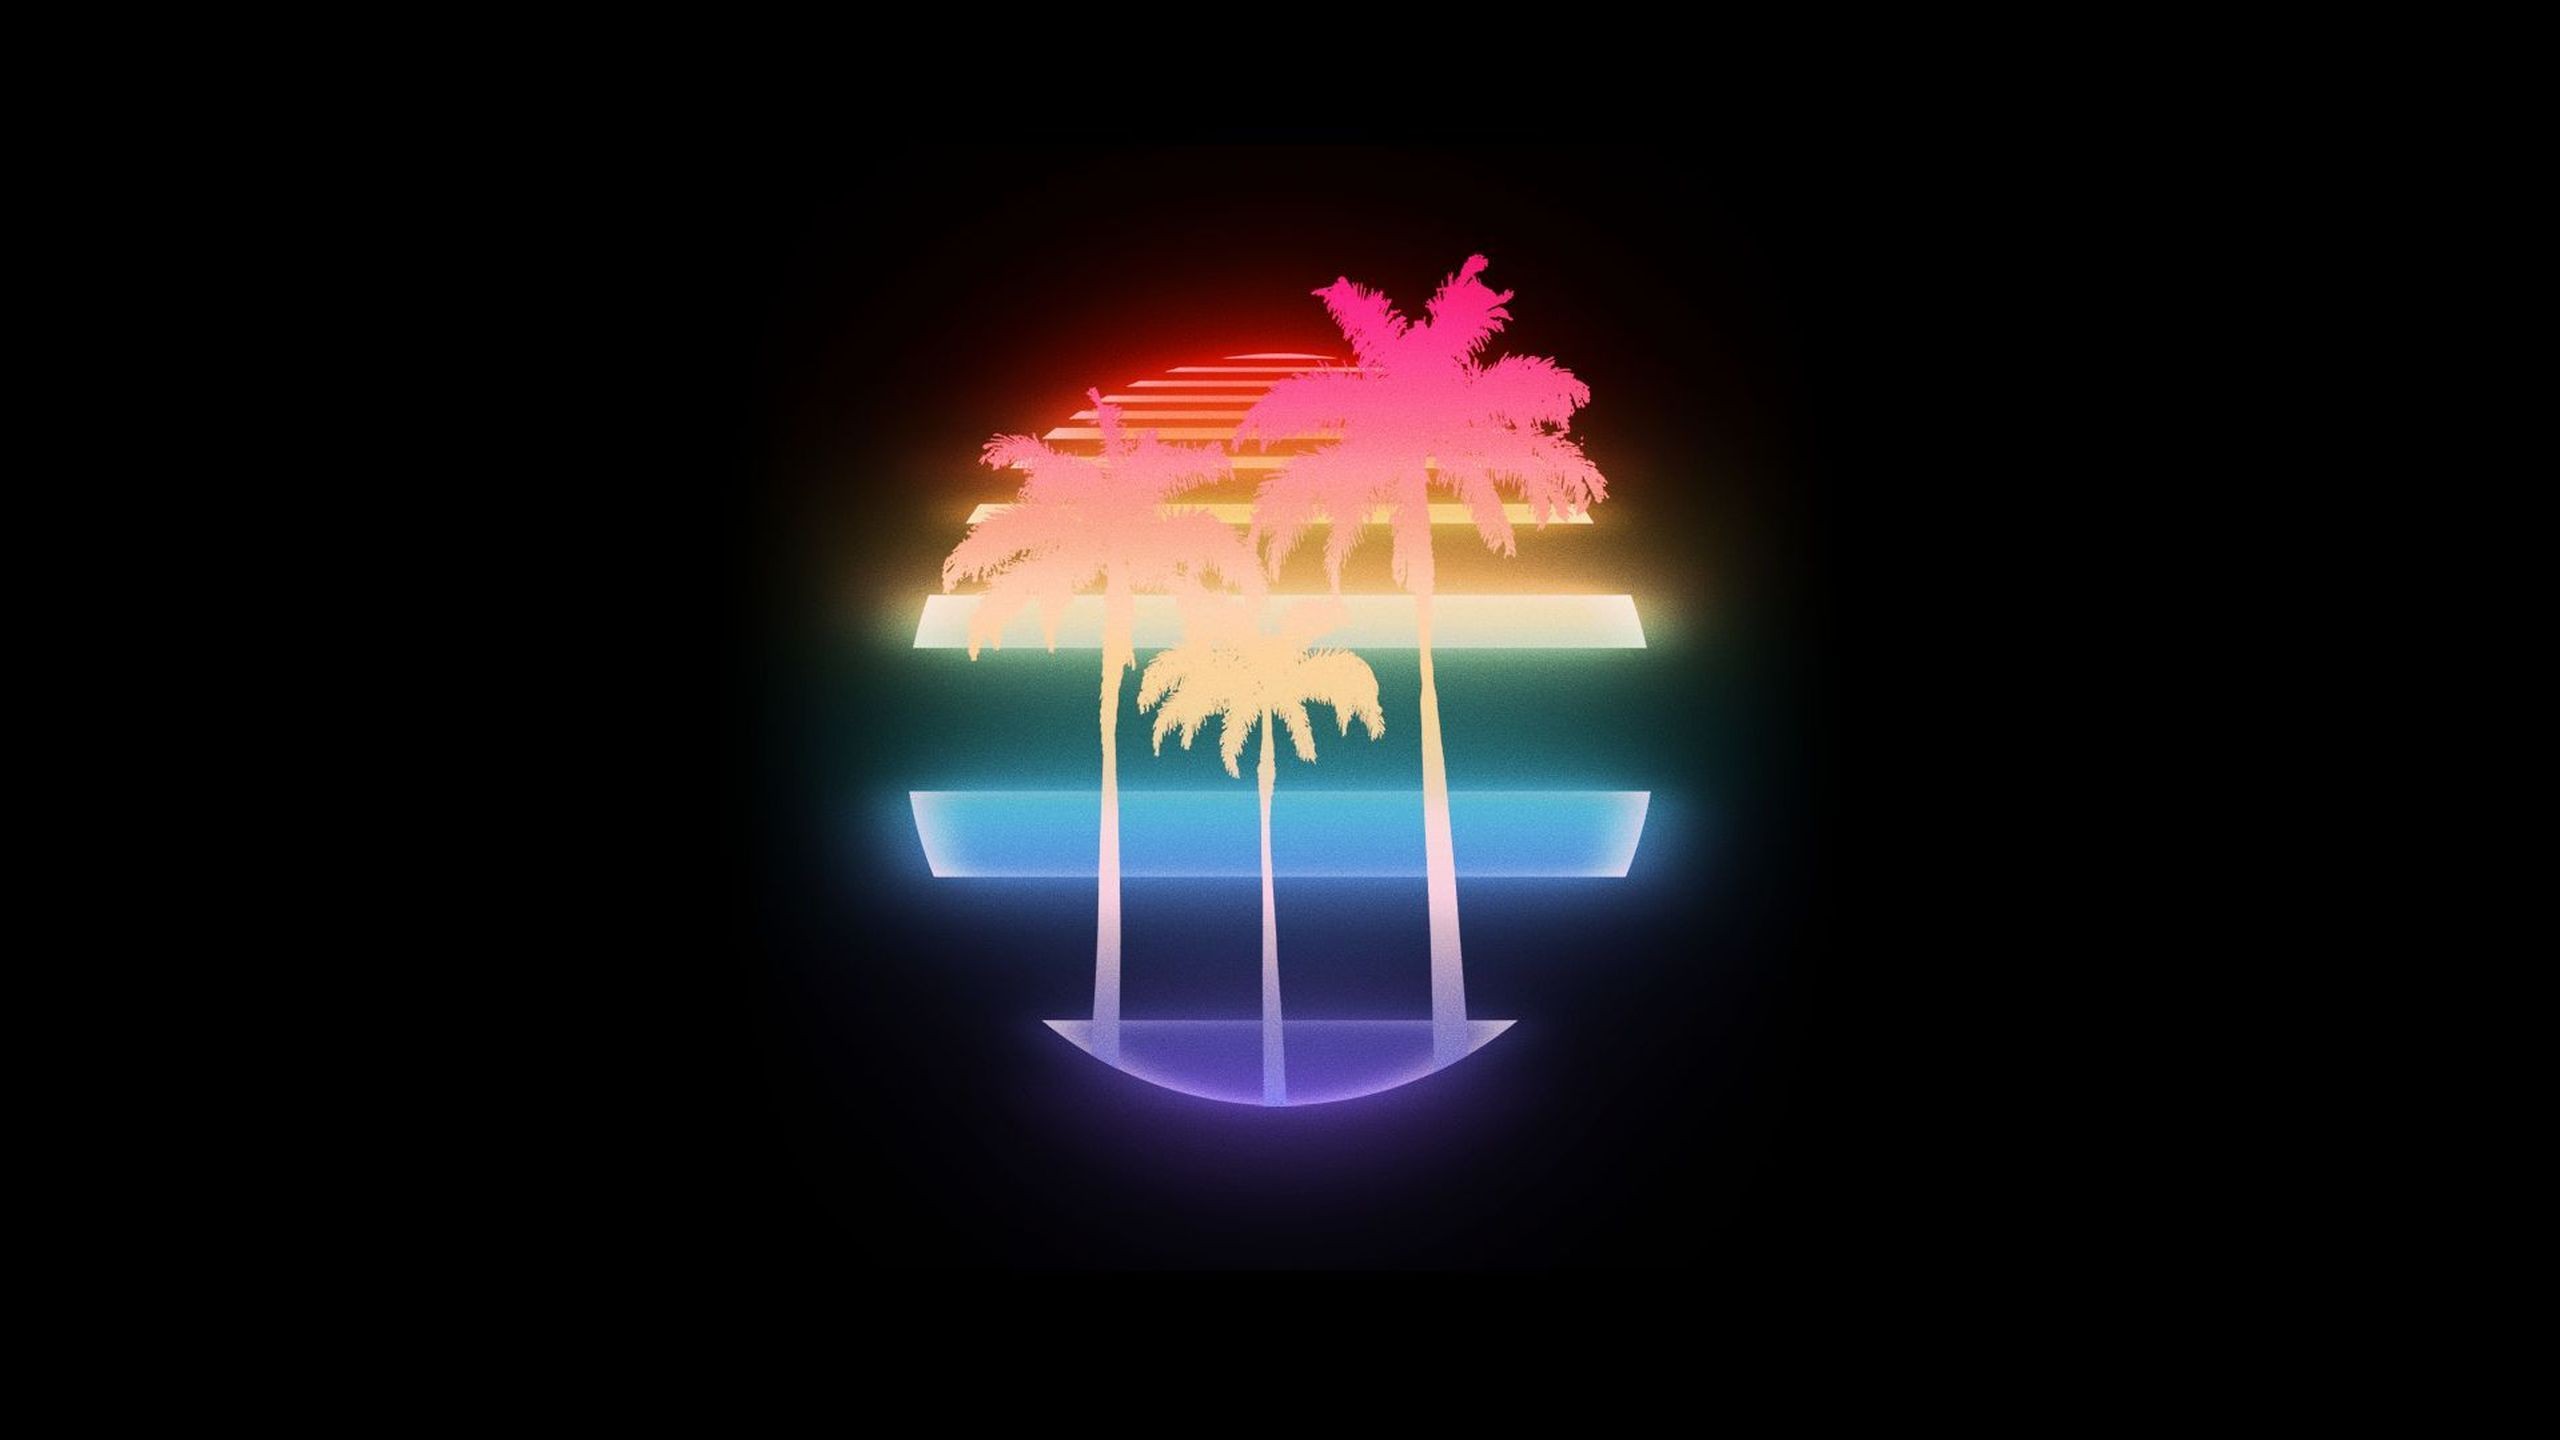 General 2560x1440 1980s palm trees neon minimalism simple background digital art